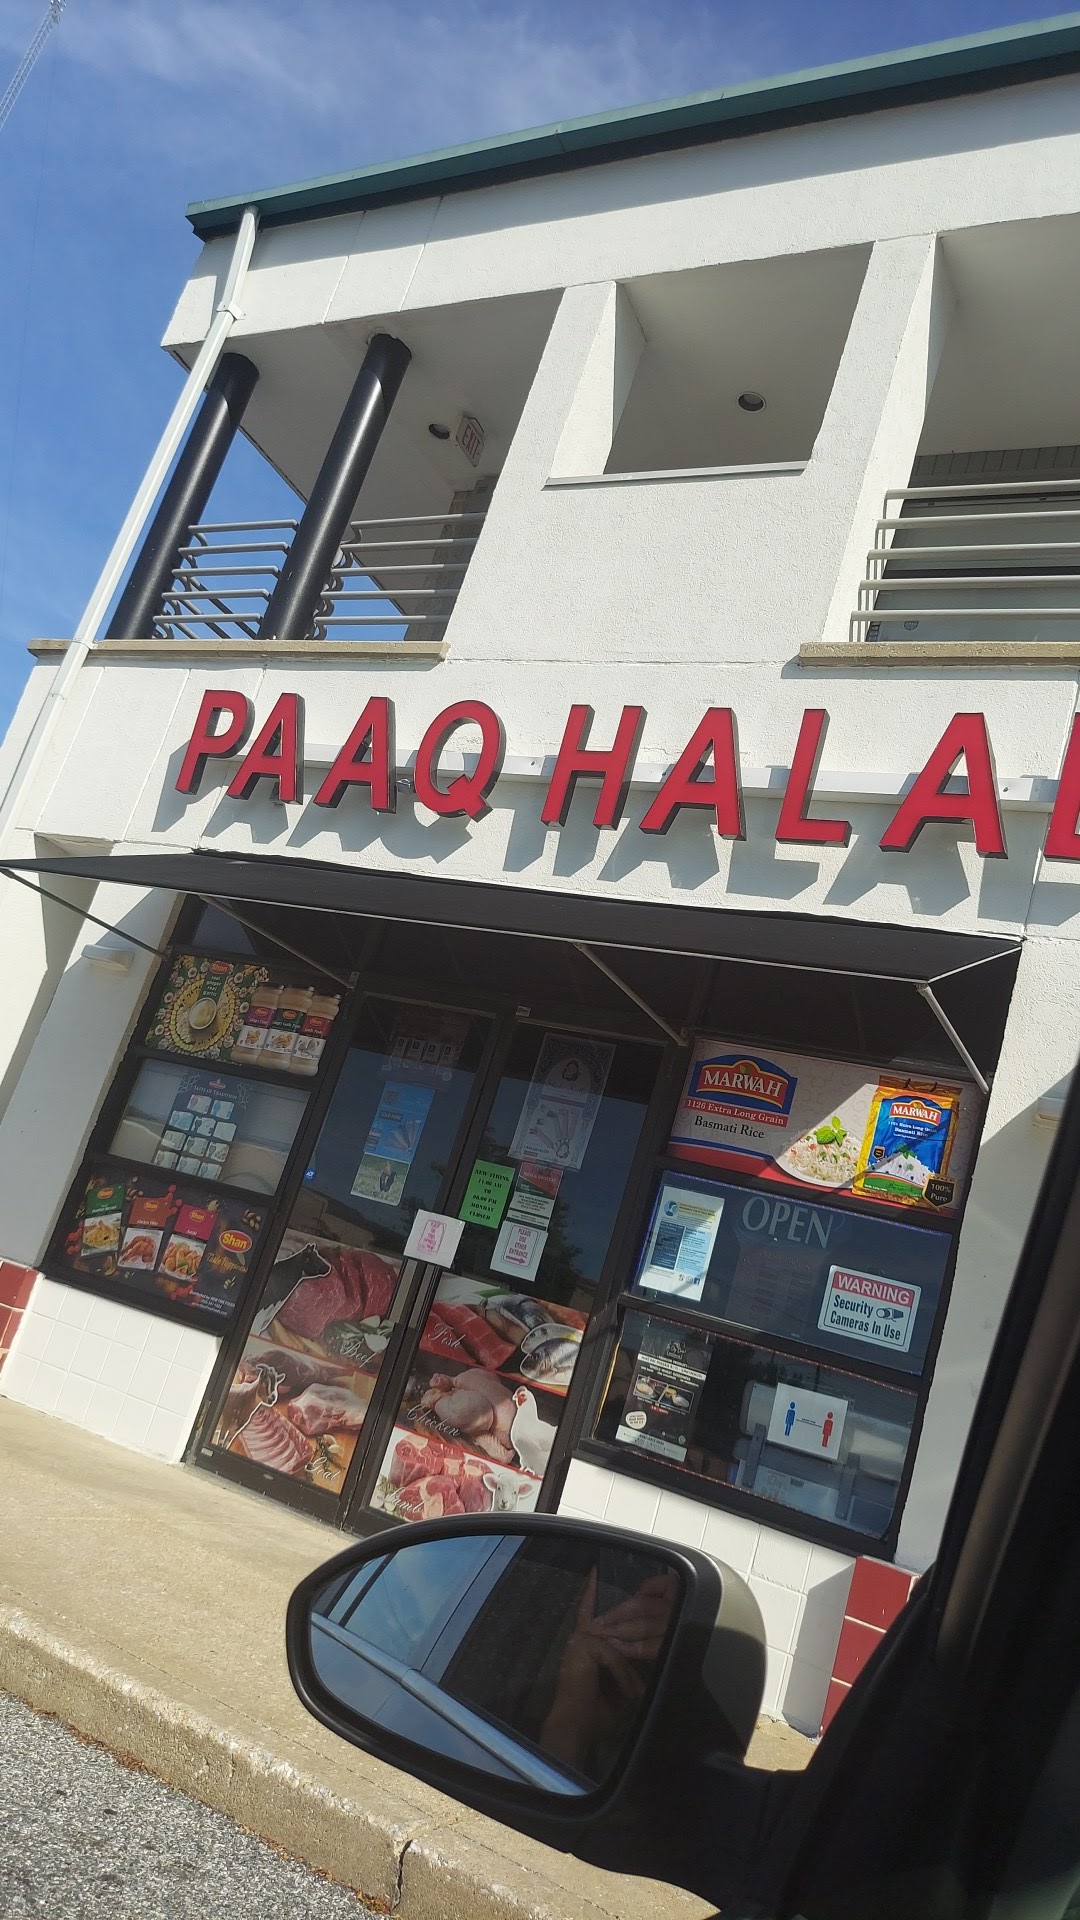 Paaq Halal Meat & Grocery